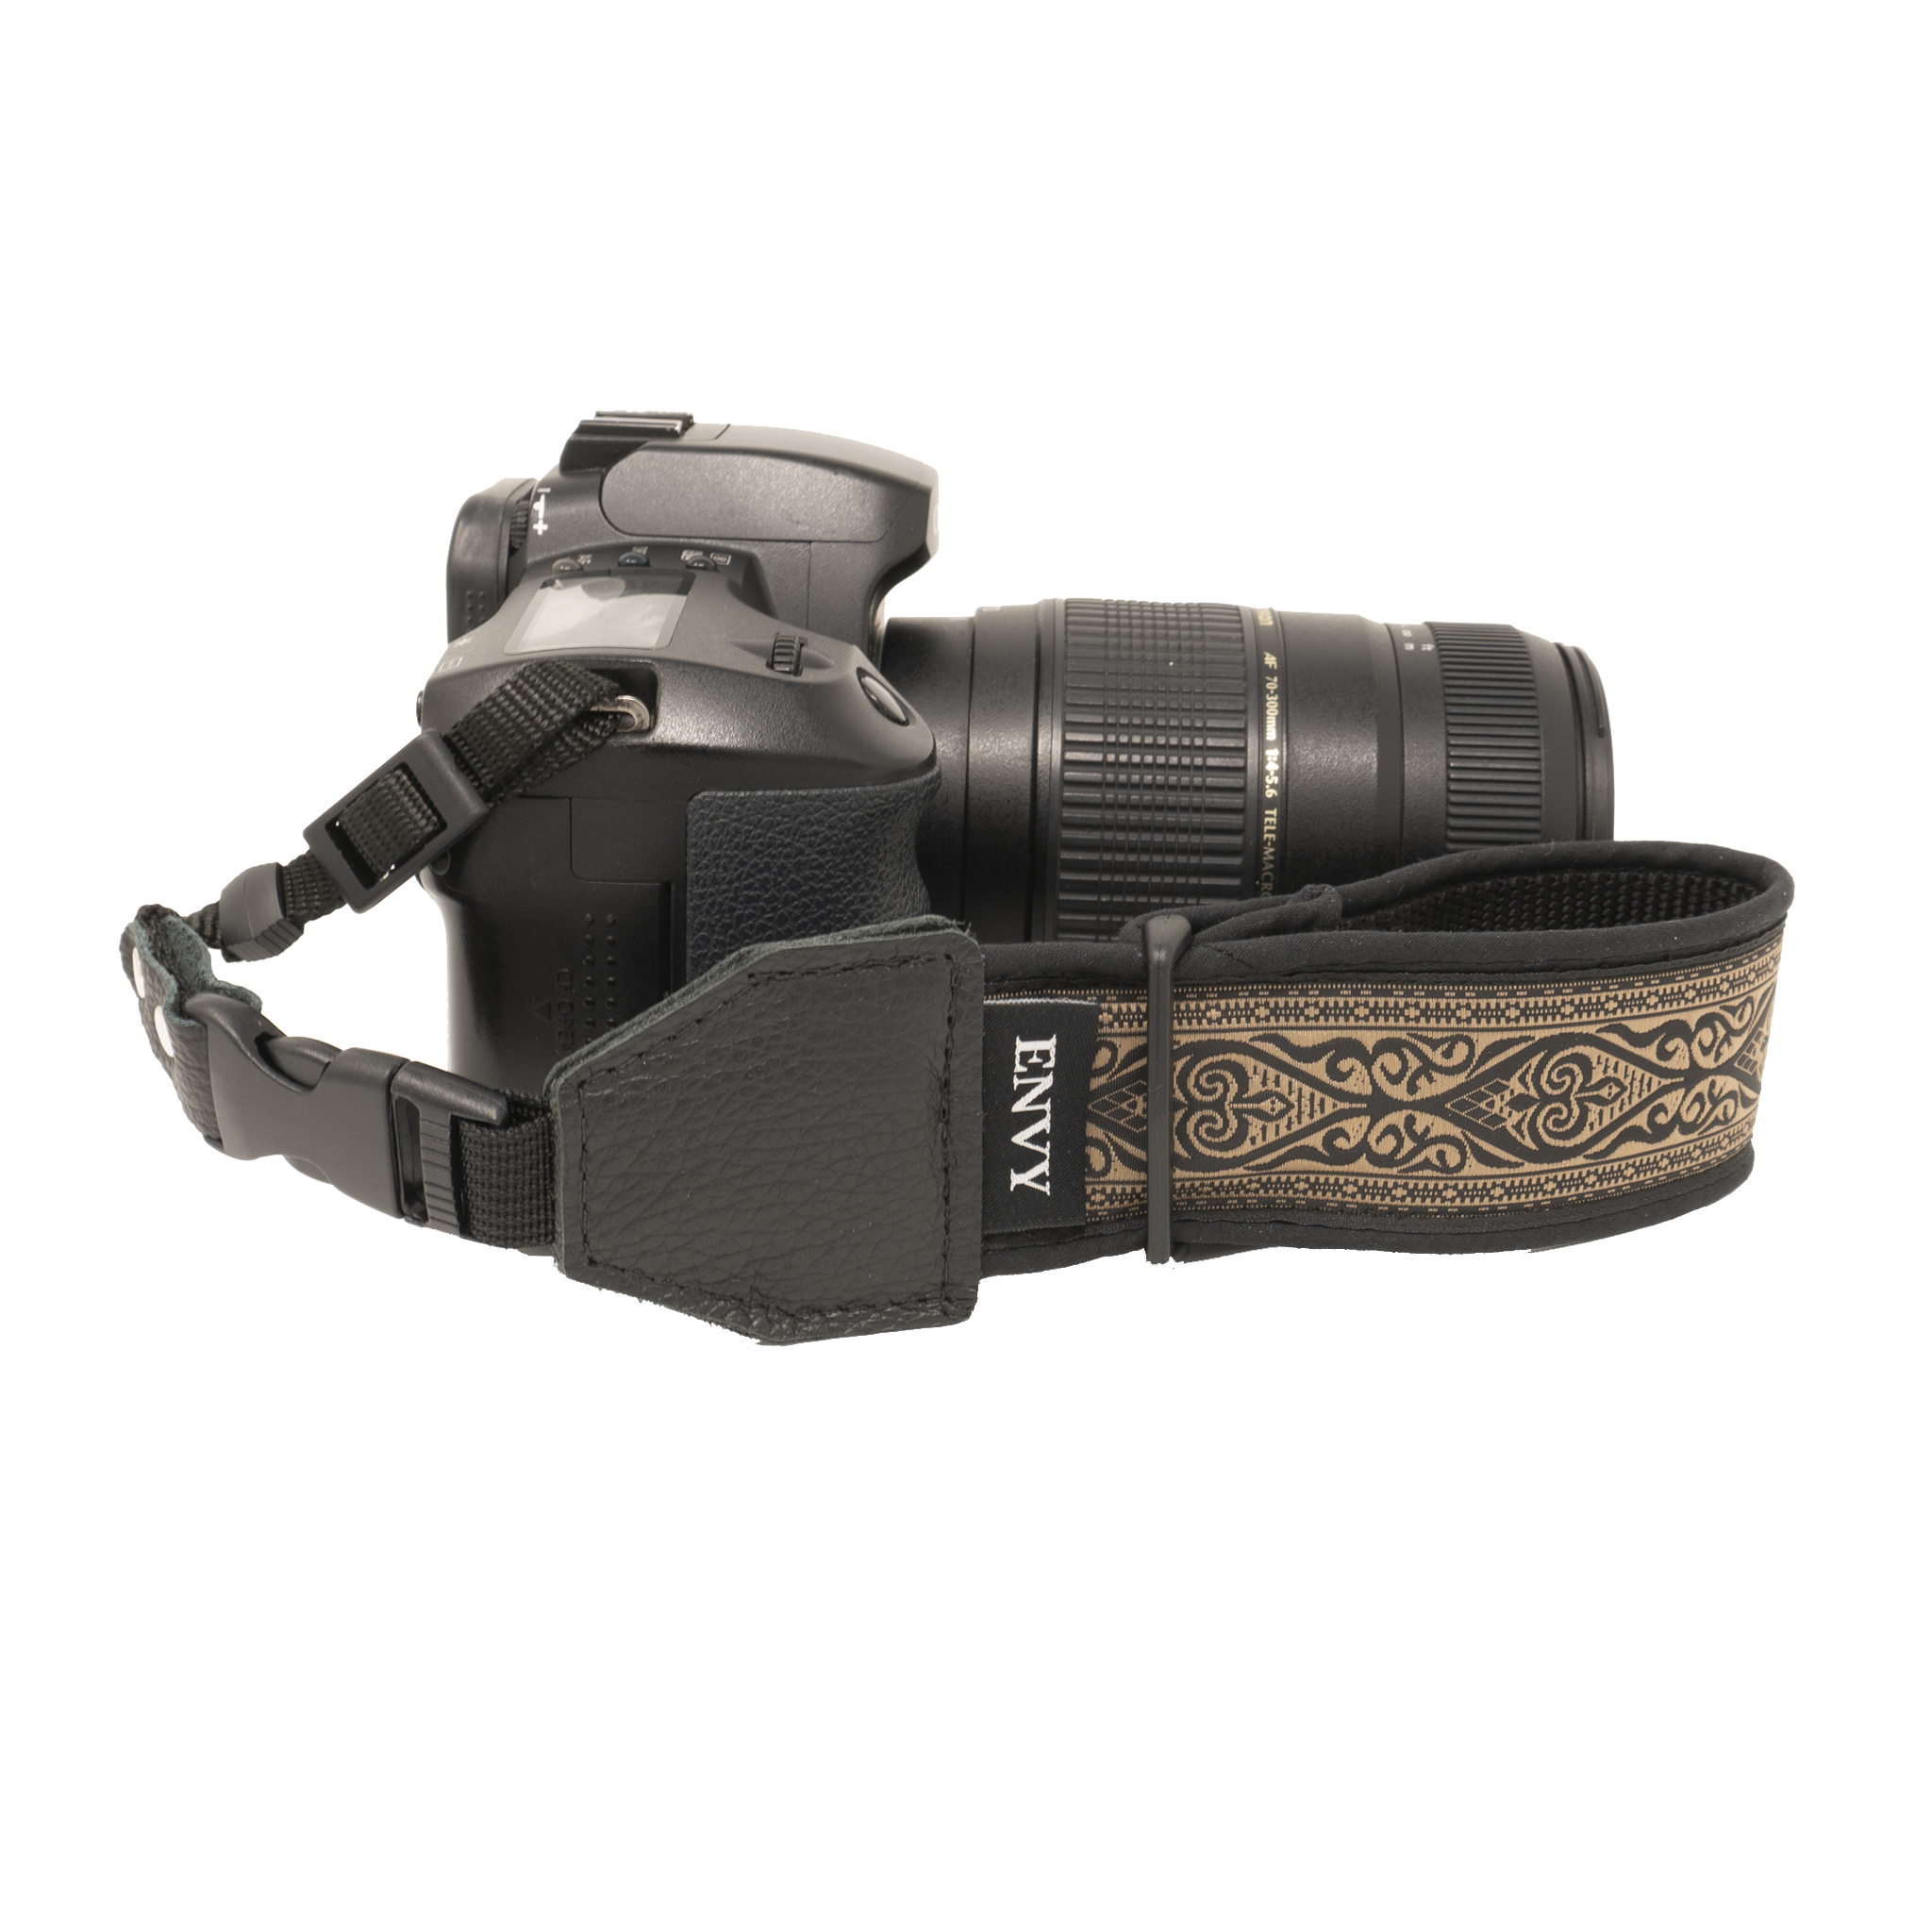 My Fave Camera Wrist Strap - Pattern: Driftwood Owl, Color: Black